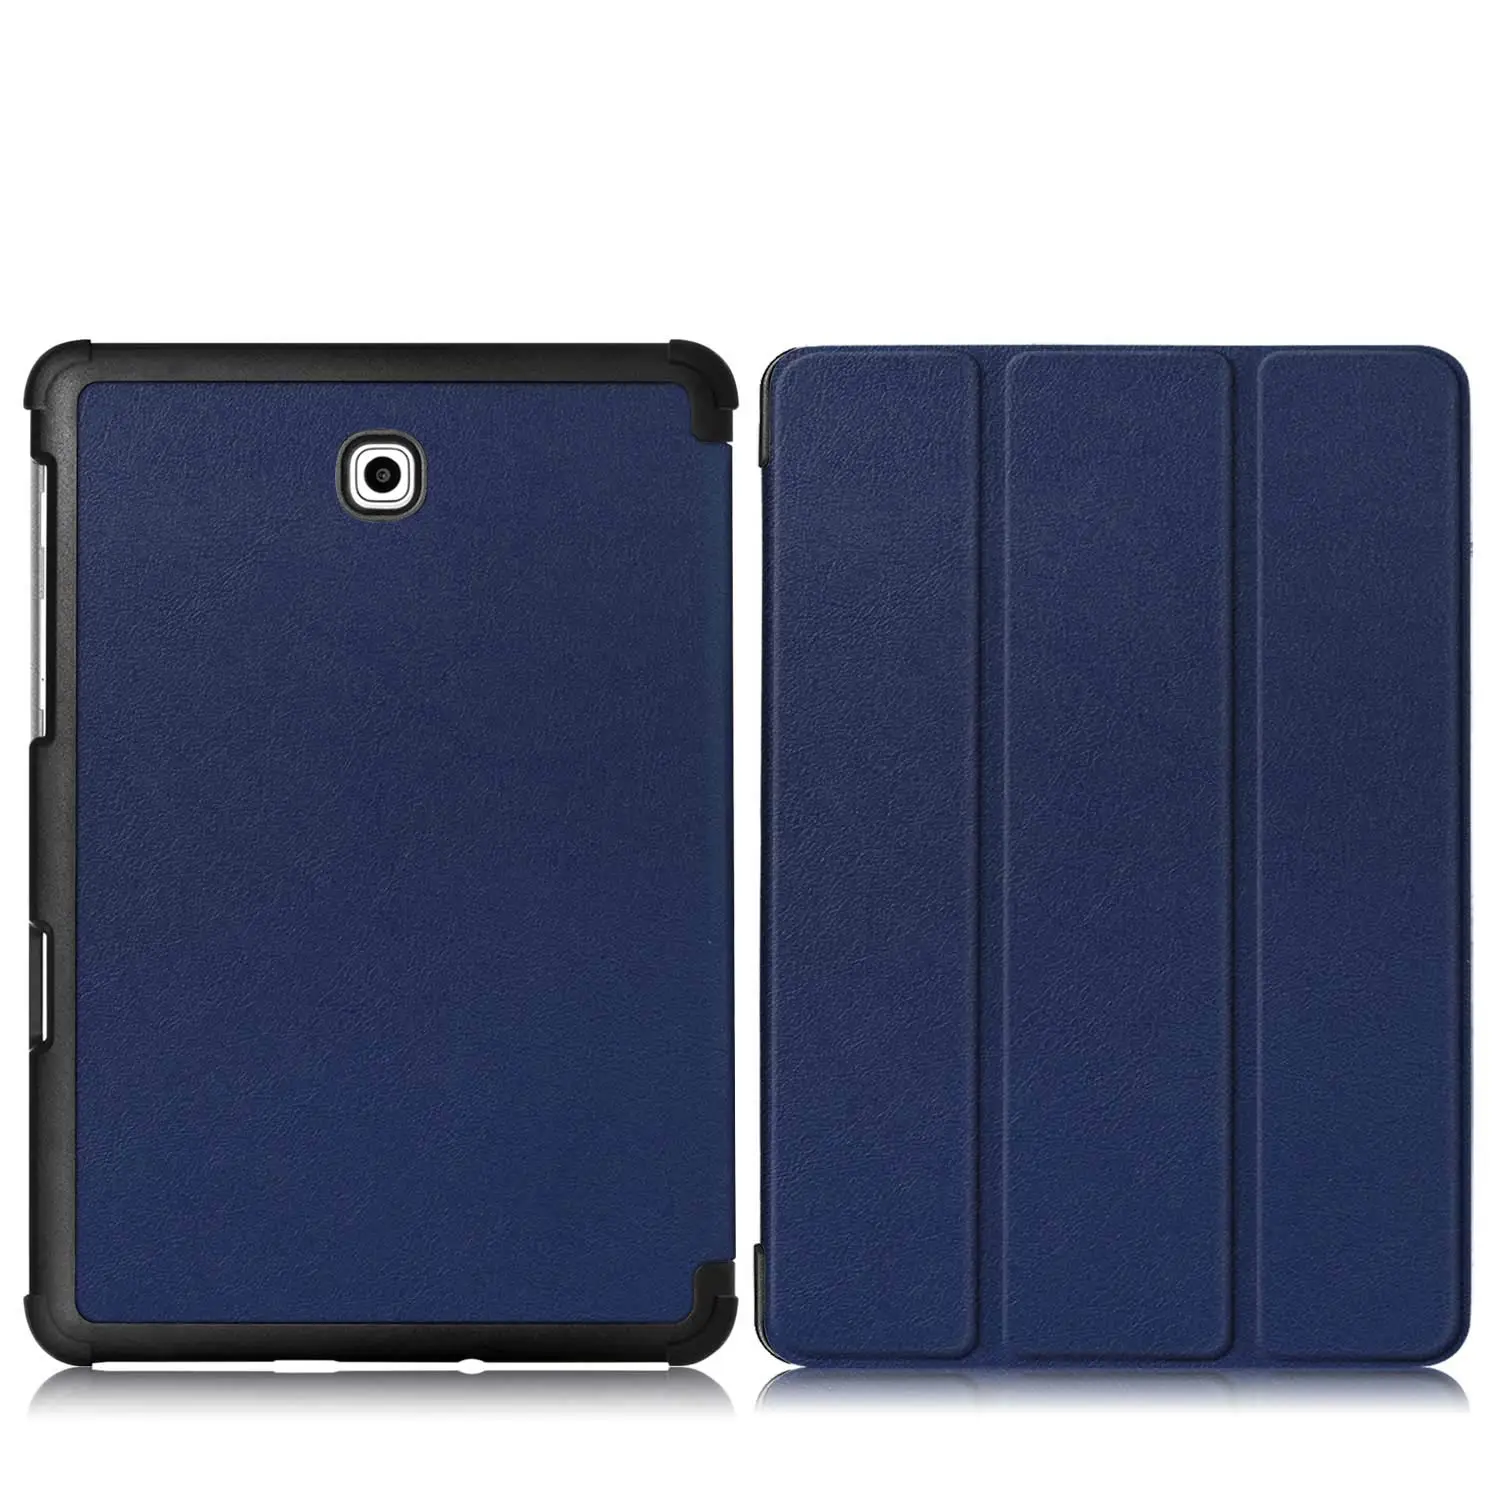 Из искусственной кожи чехол для samsung Galaxy Tab S2 8 SM-T710 T713 T719 T715 крышка чехол для samsung Tab S2 8,0 чехол - Цвет: T715 KST Dark blue